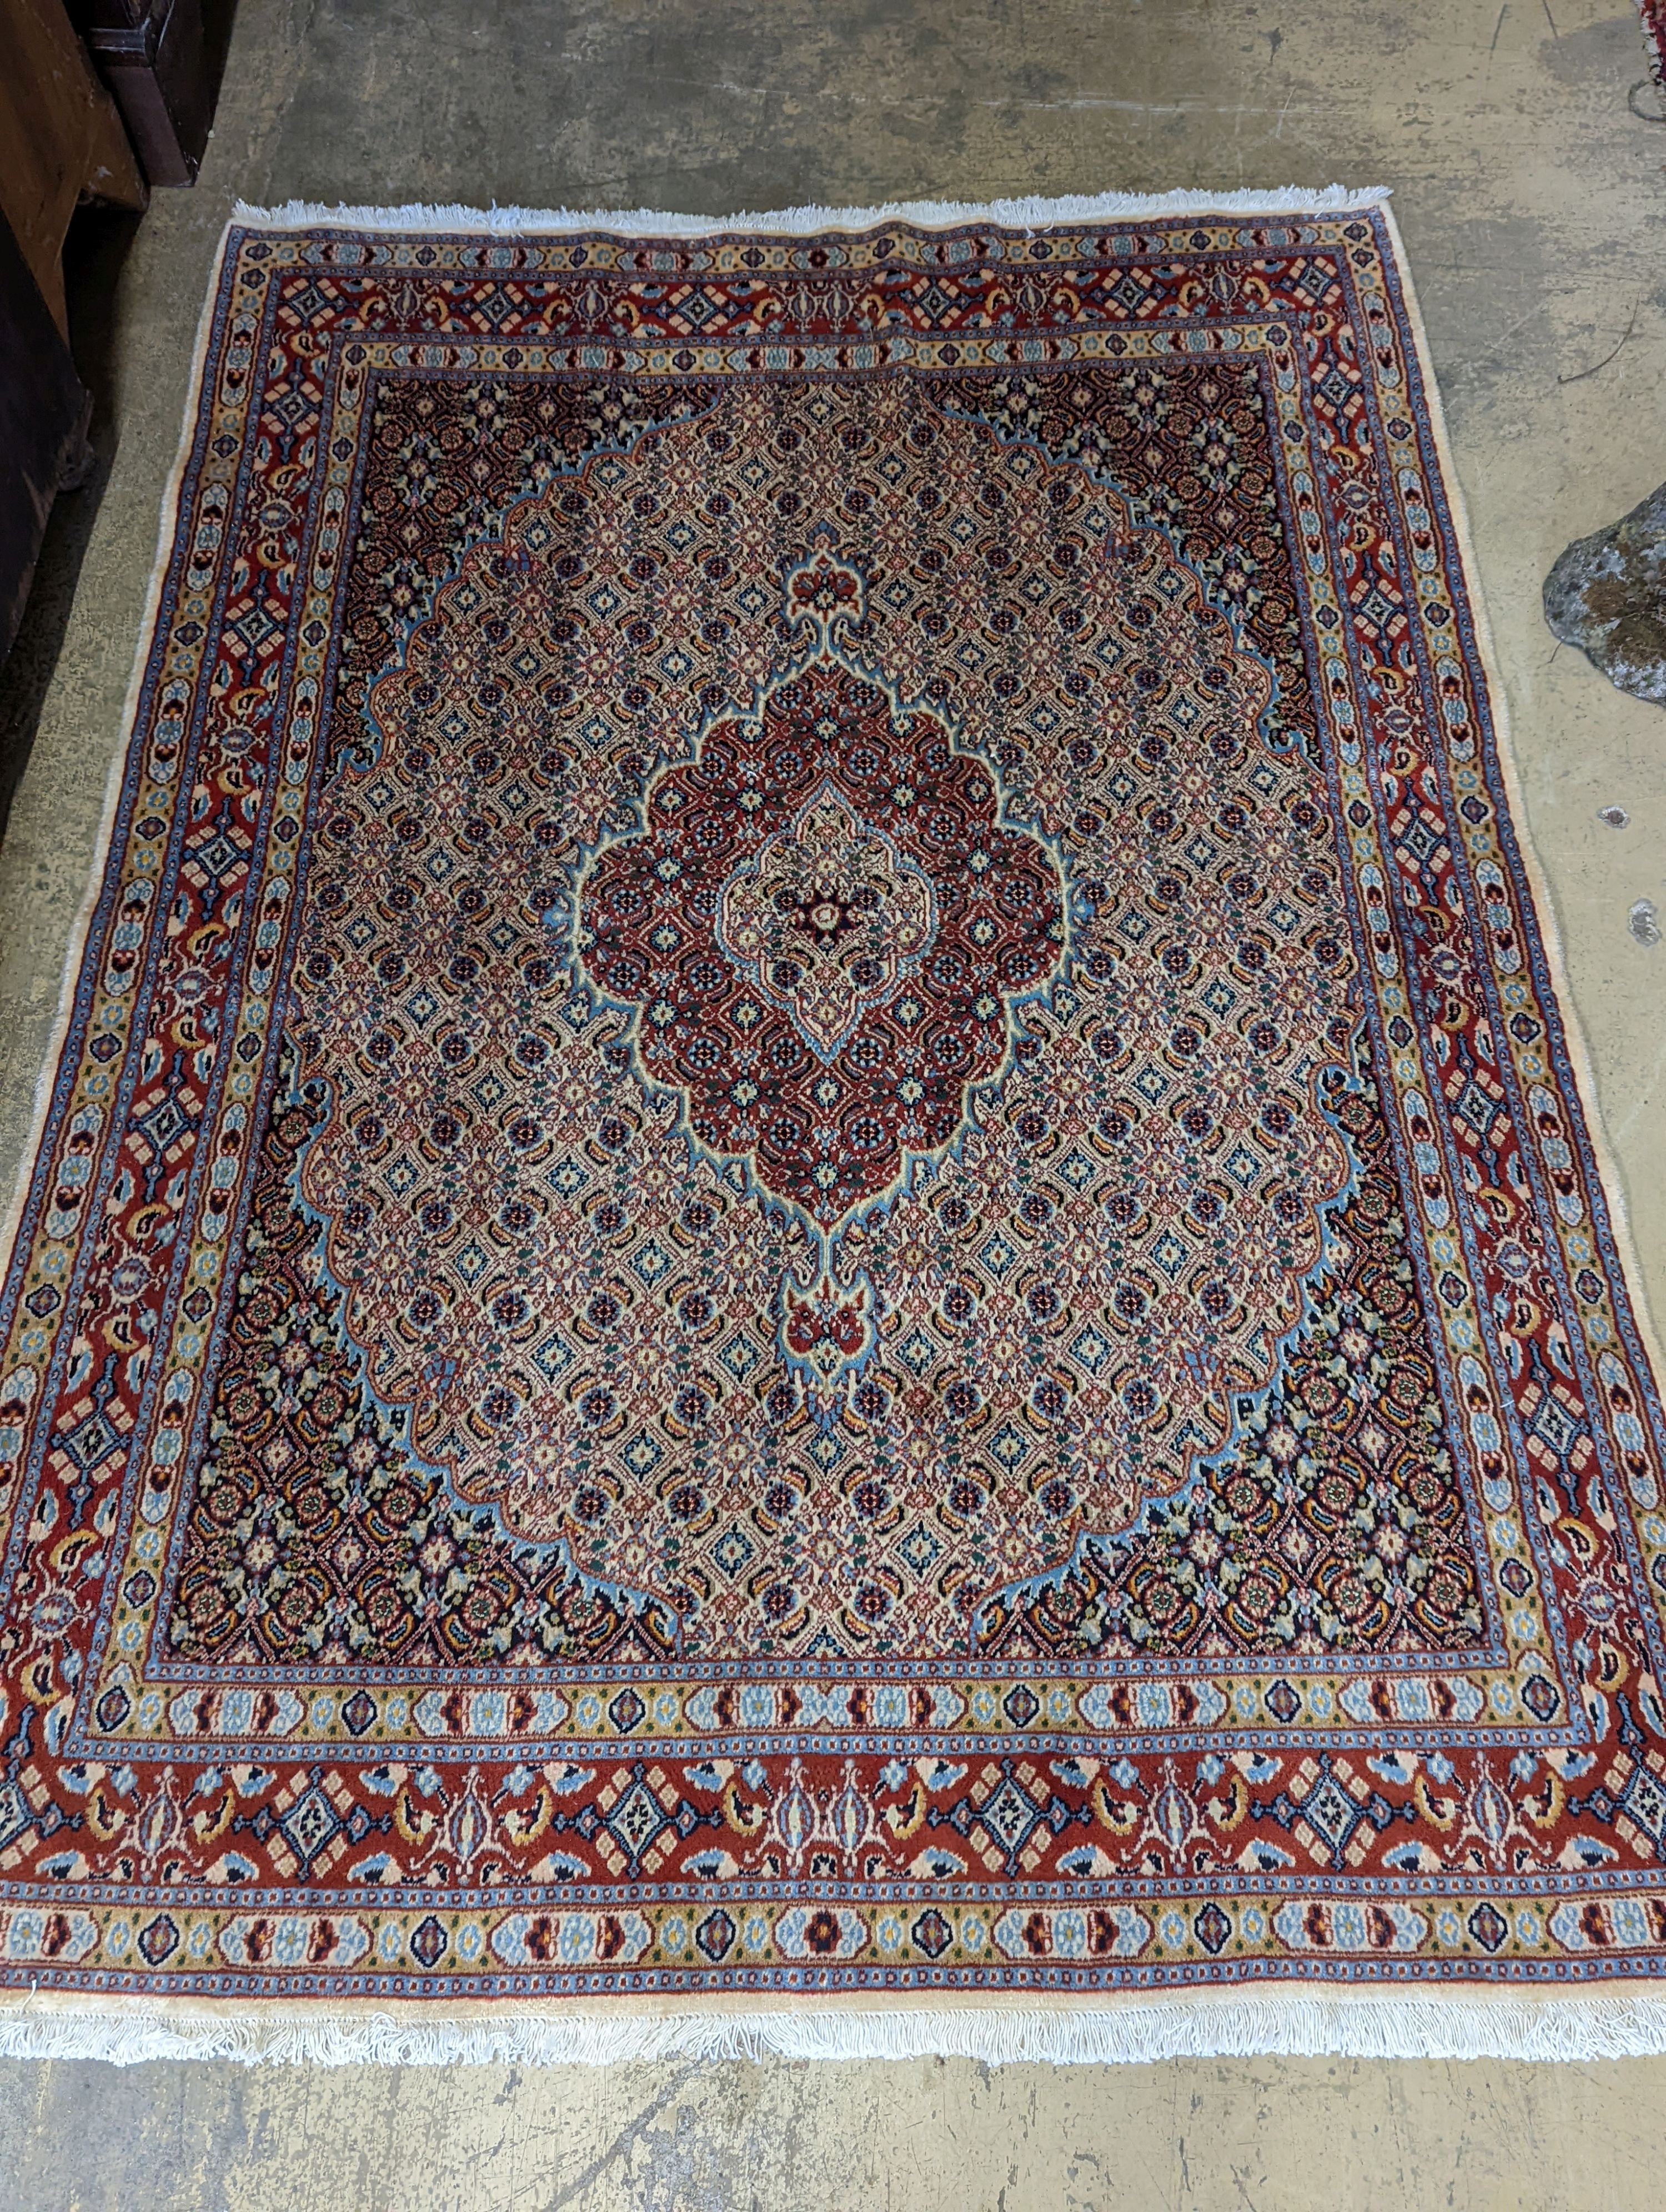 A Mood carpet, 200 x 150cm